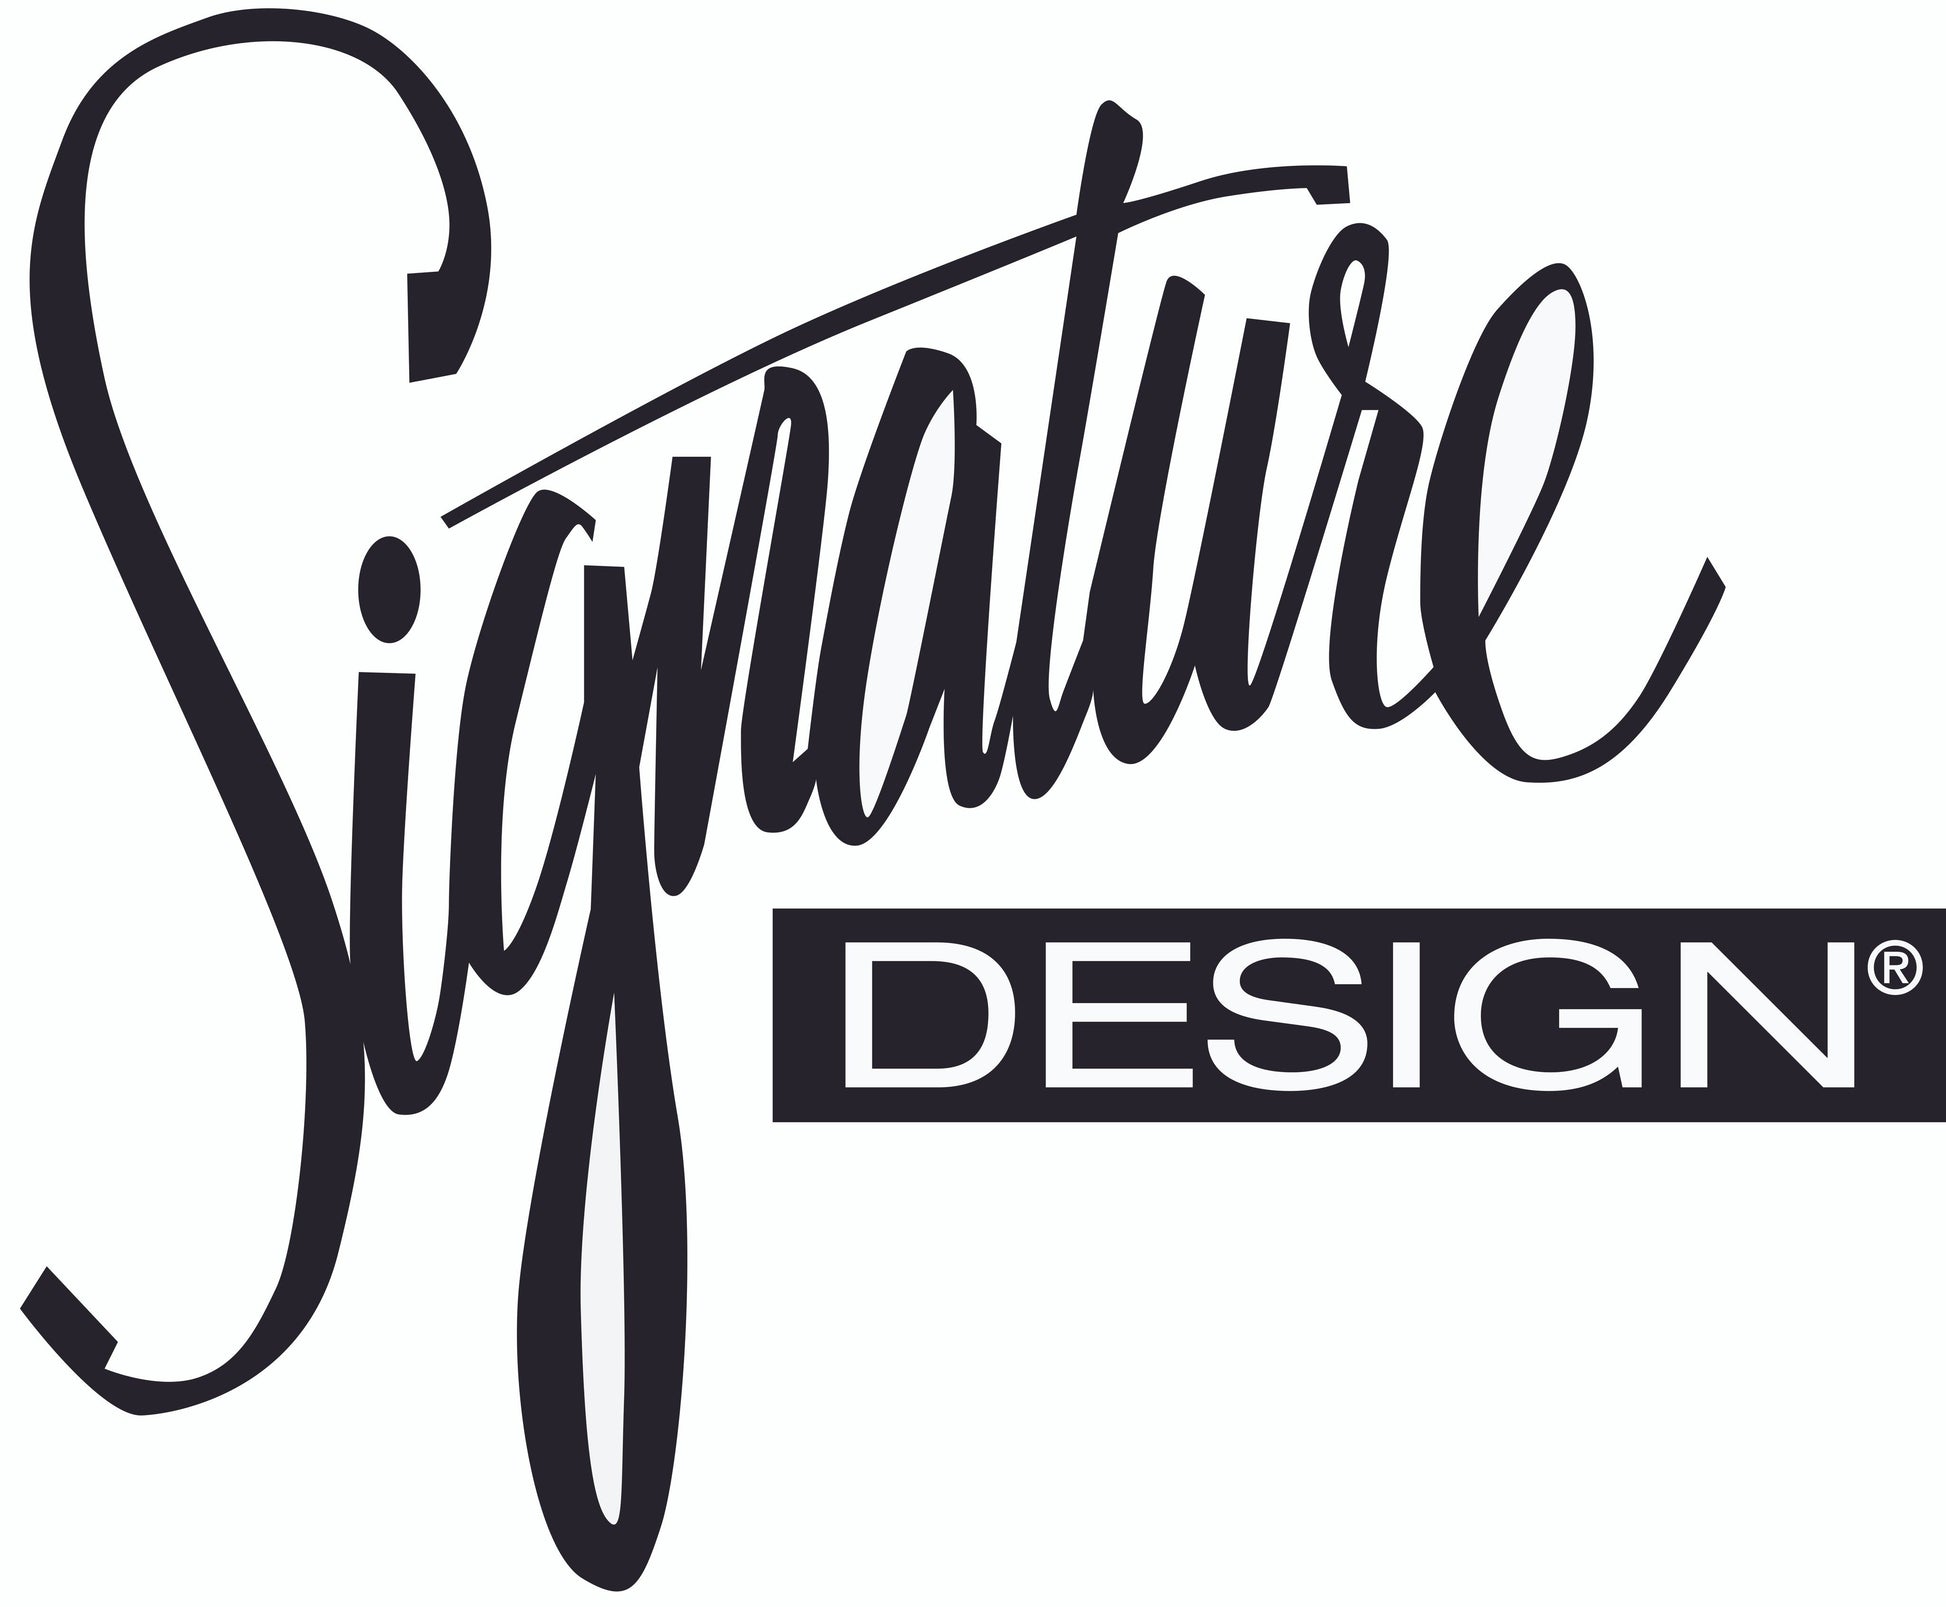 Fortman Dresser and Mirror Signature Design by Ashley®